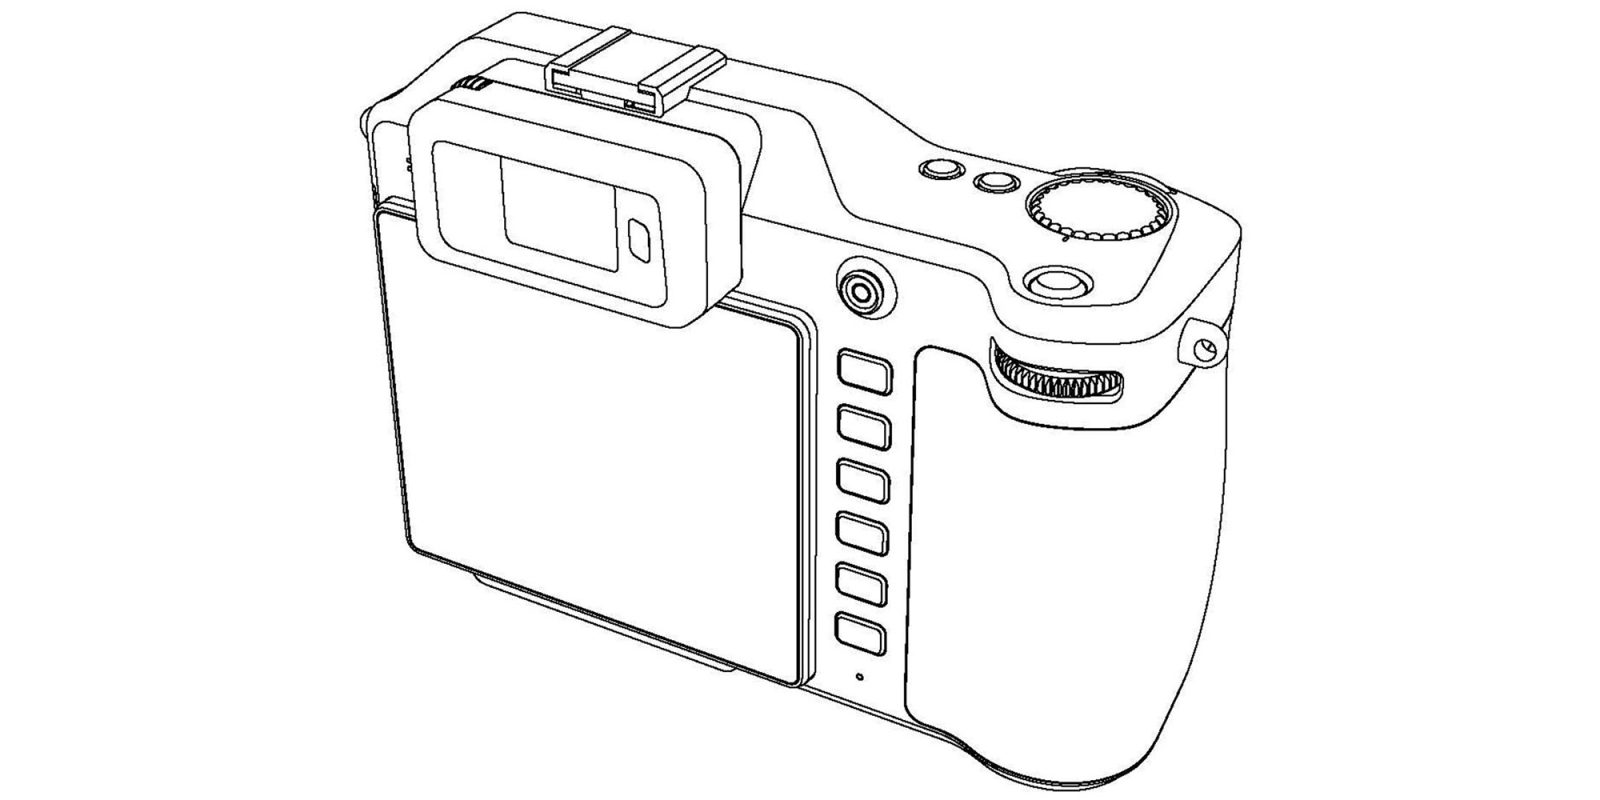 DJI-mirrorless-camera-hassleblad.jpg